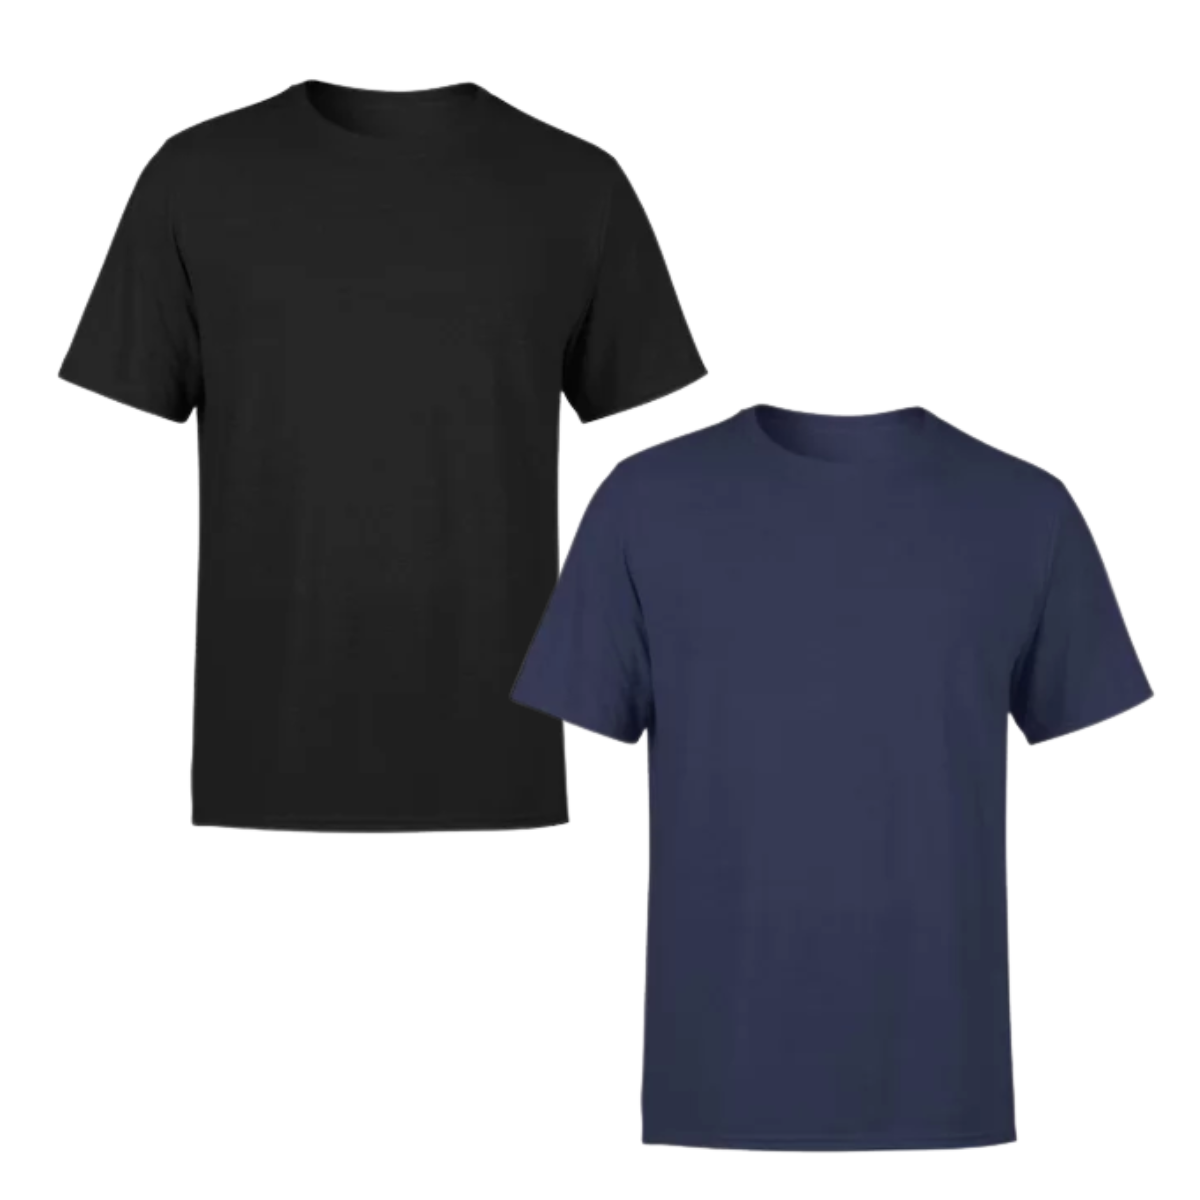 Kit 2 Camiseta Básica - Preto/Marinho